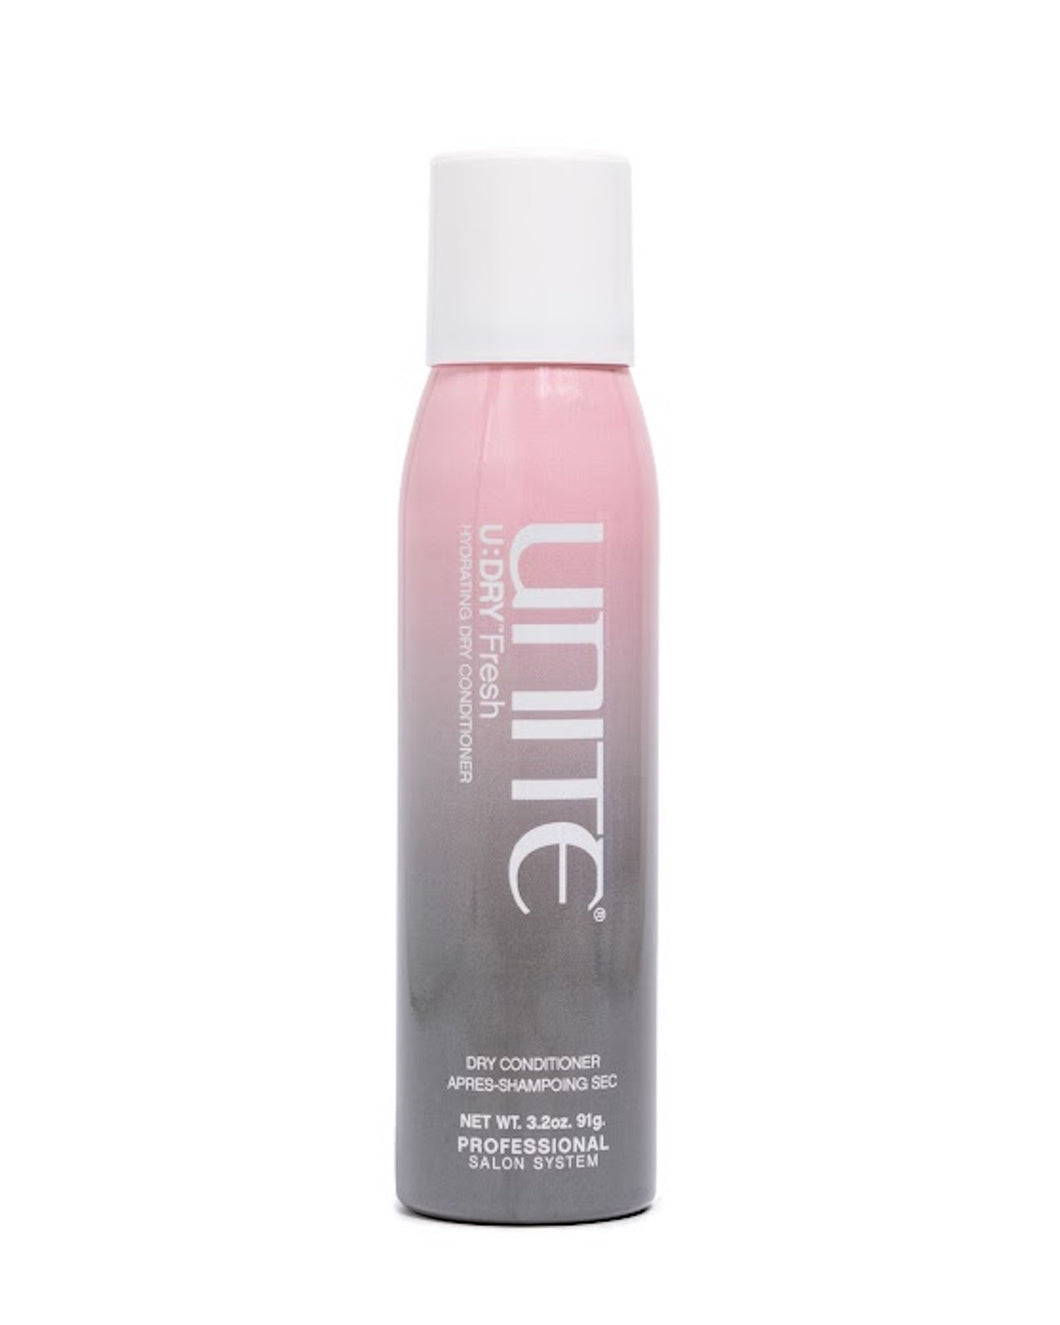 Unite - U:DRY Fresh Dry Conditioner grey/pink ombre aerosol bottle with white cap